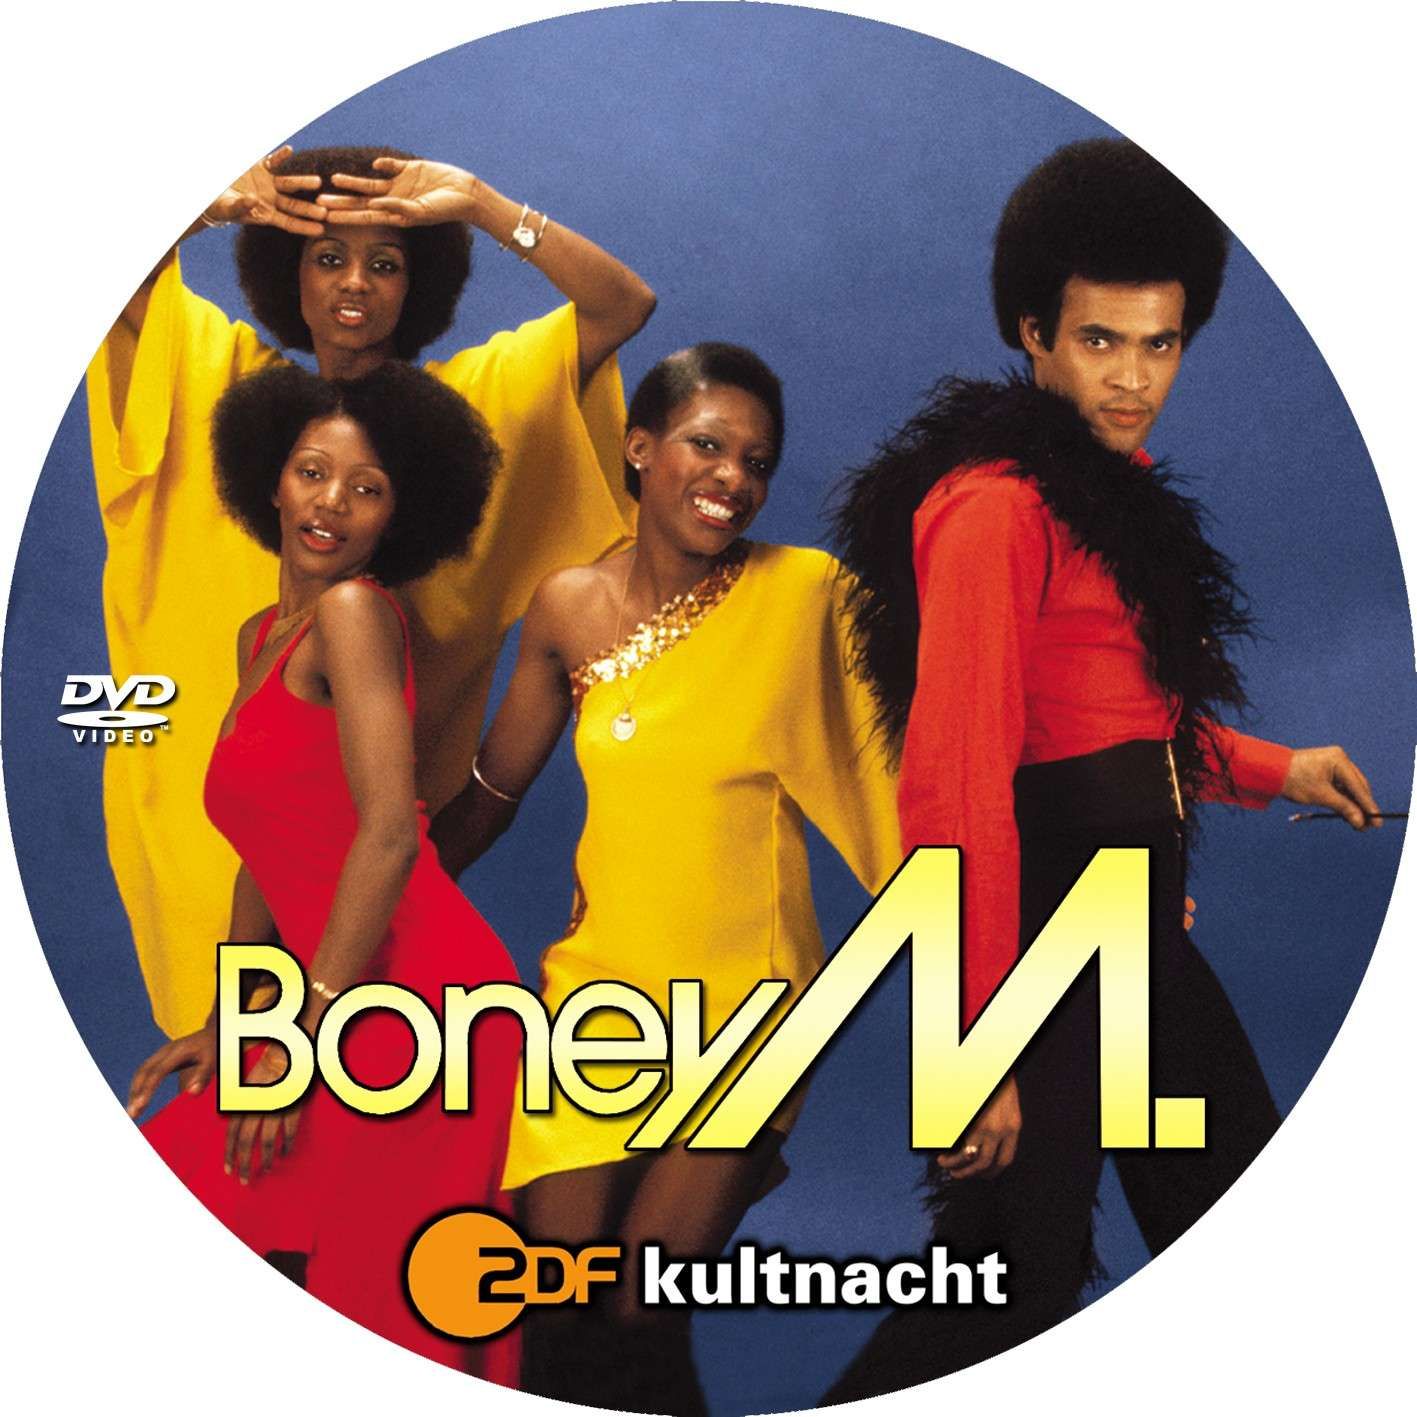 The Boney M 2 DVD